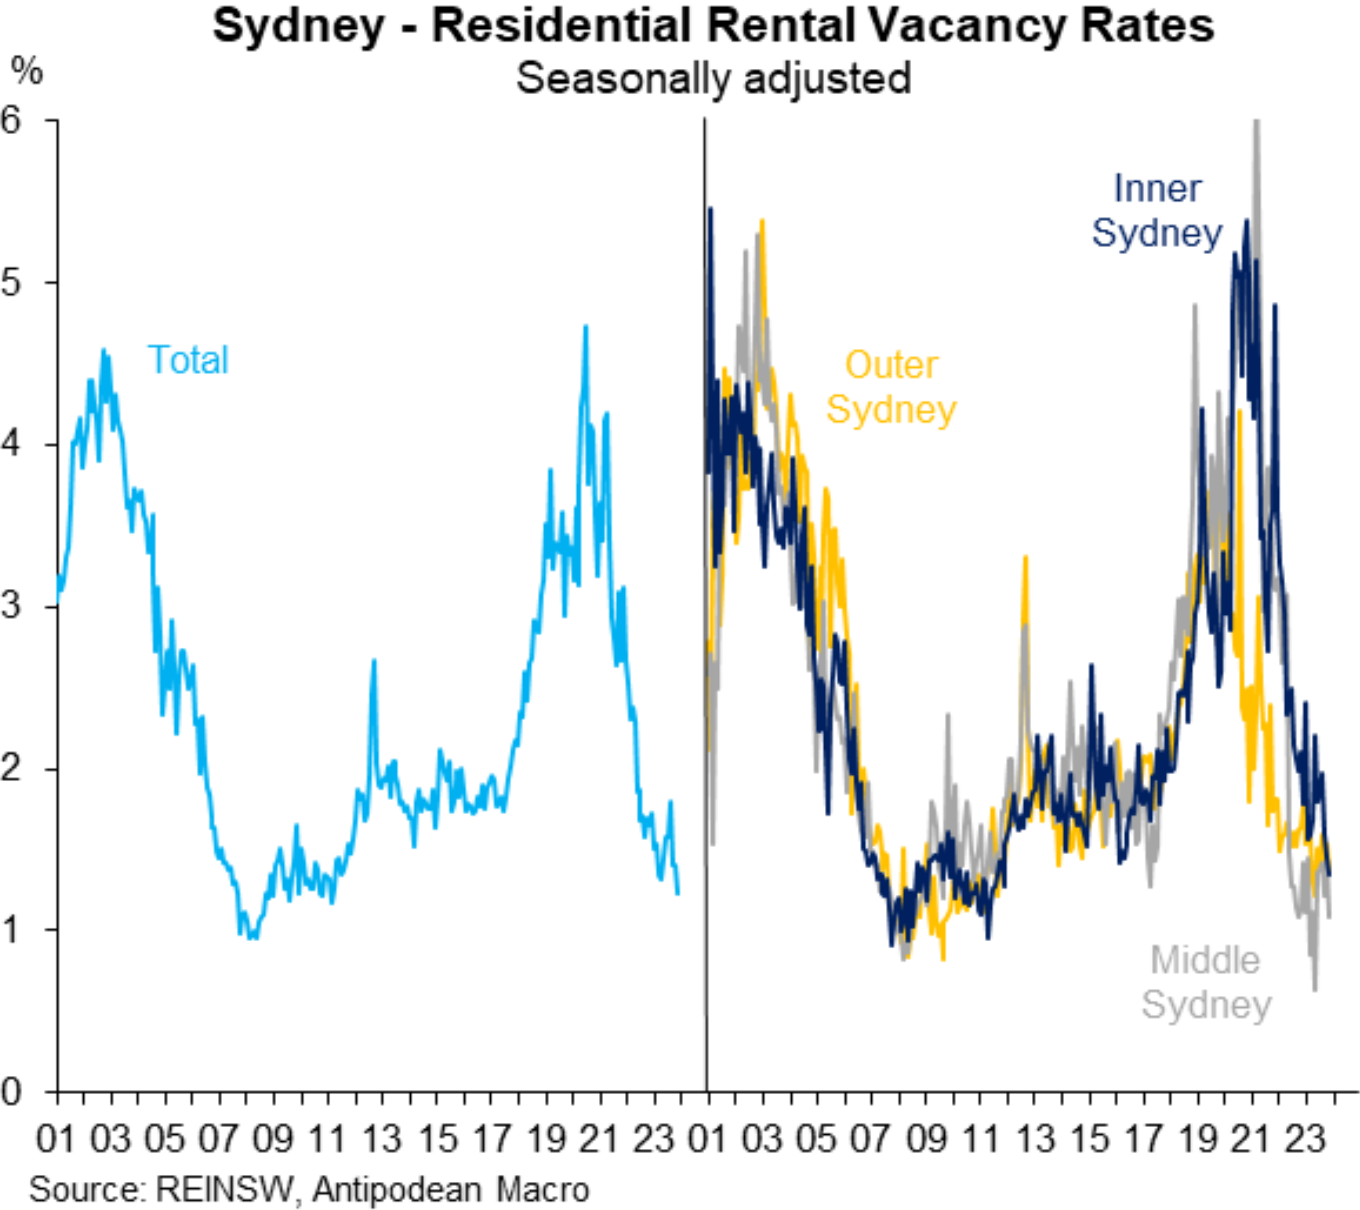 Sydney rental vacancy rates